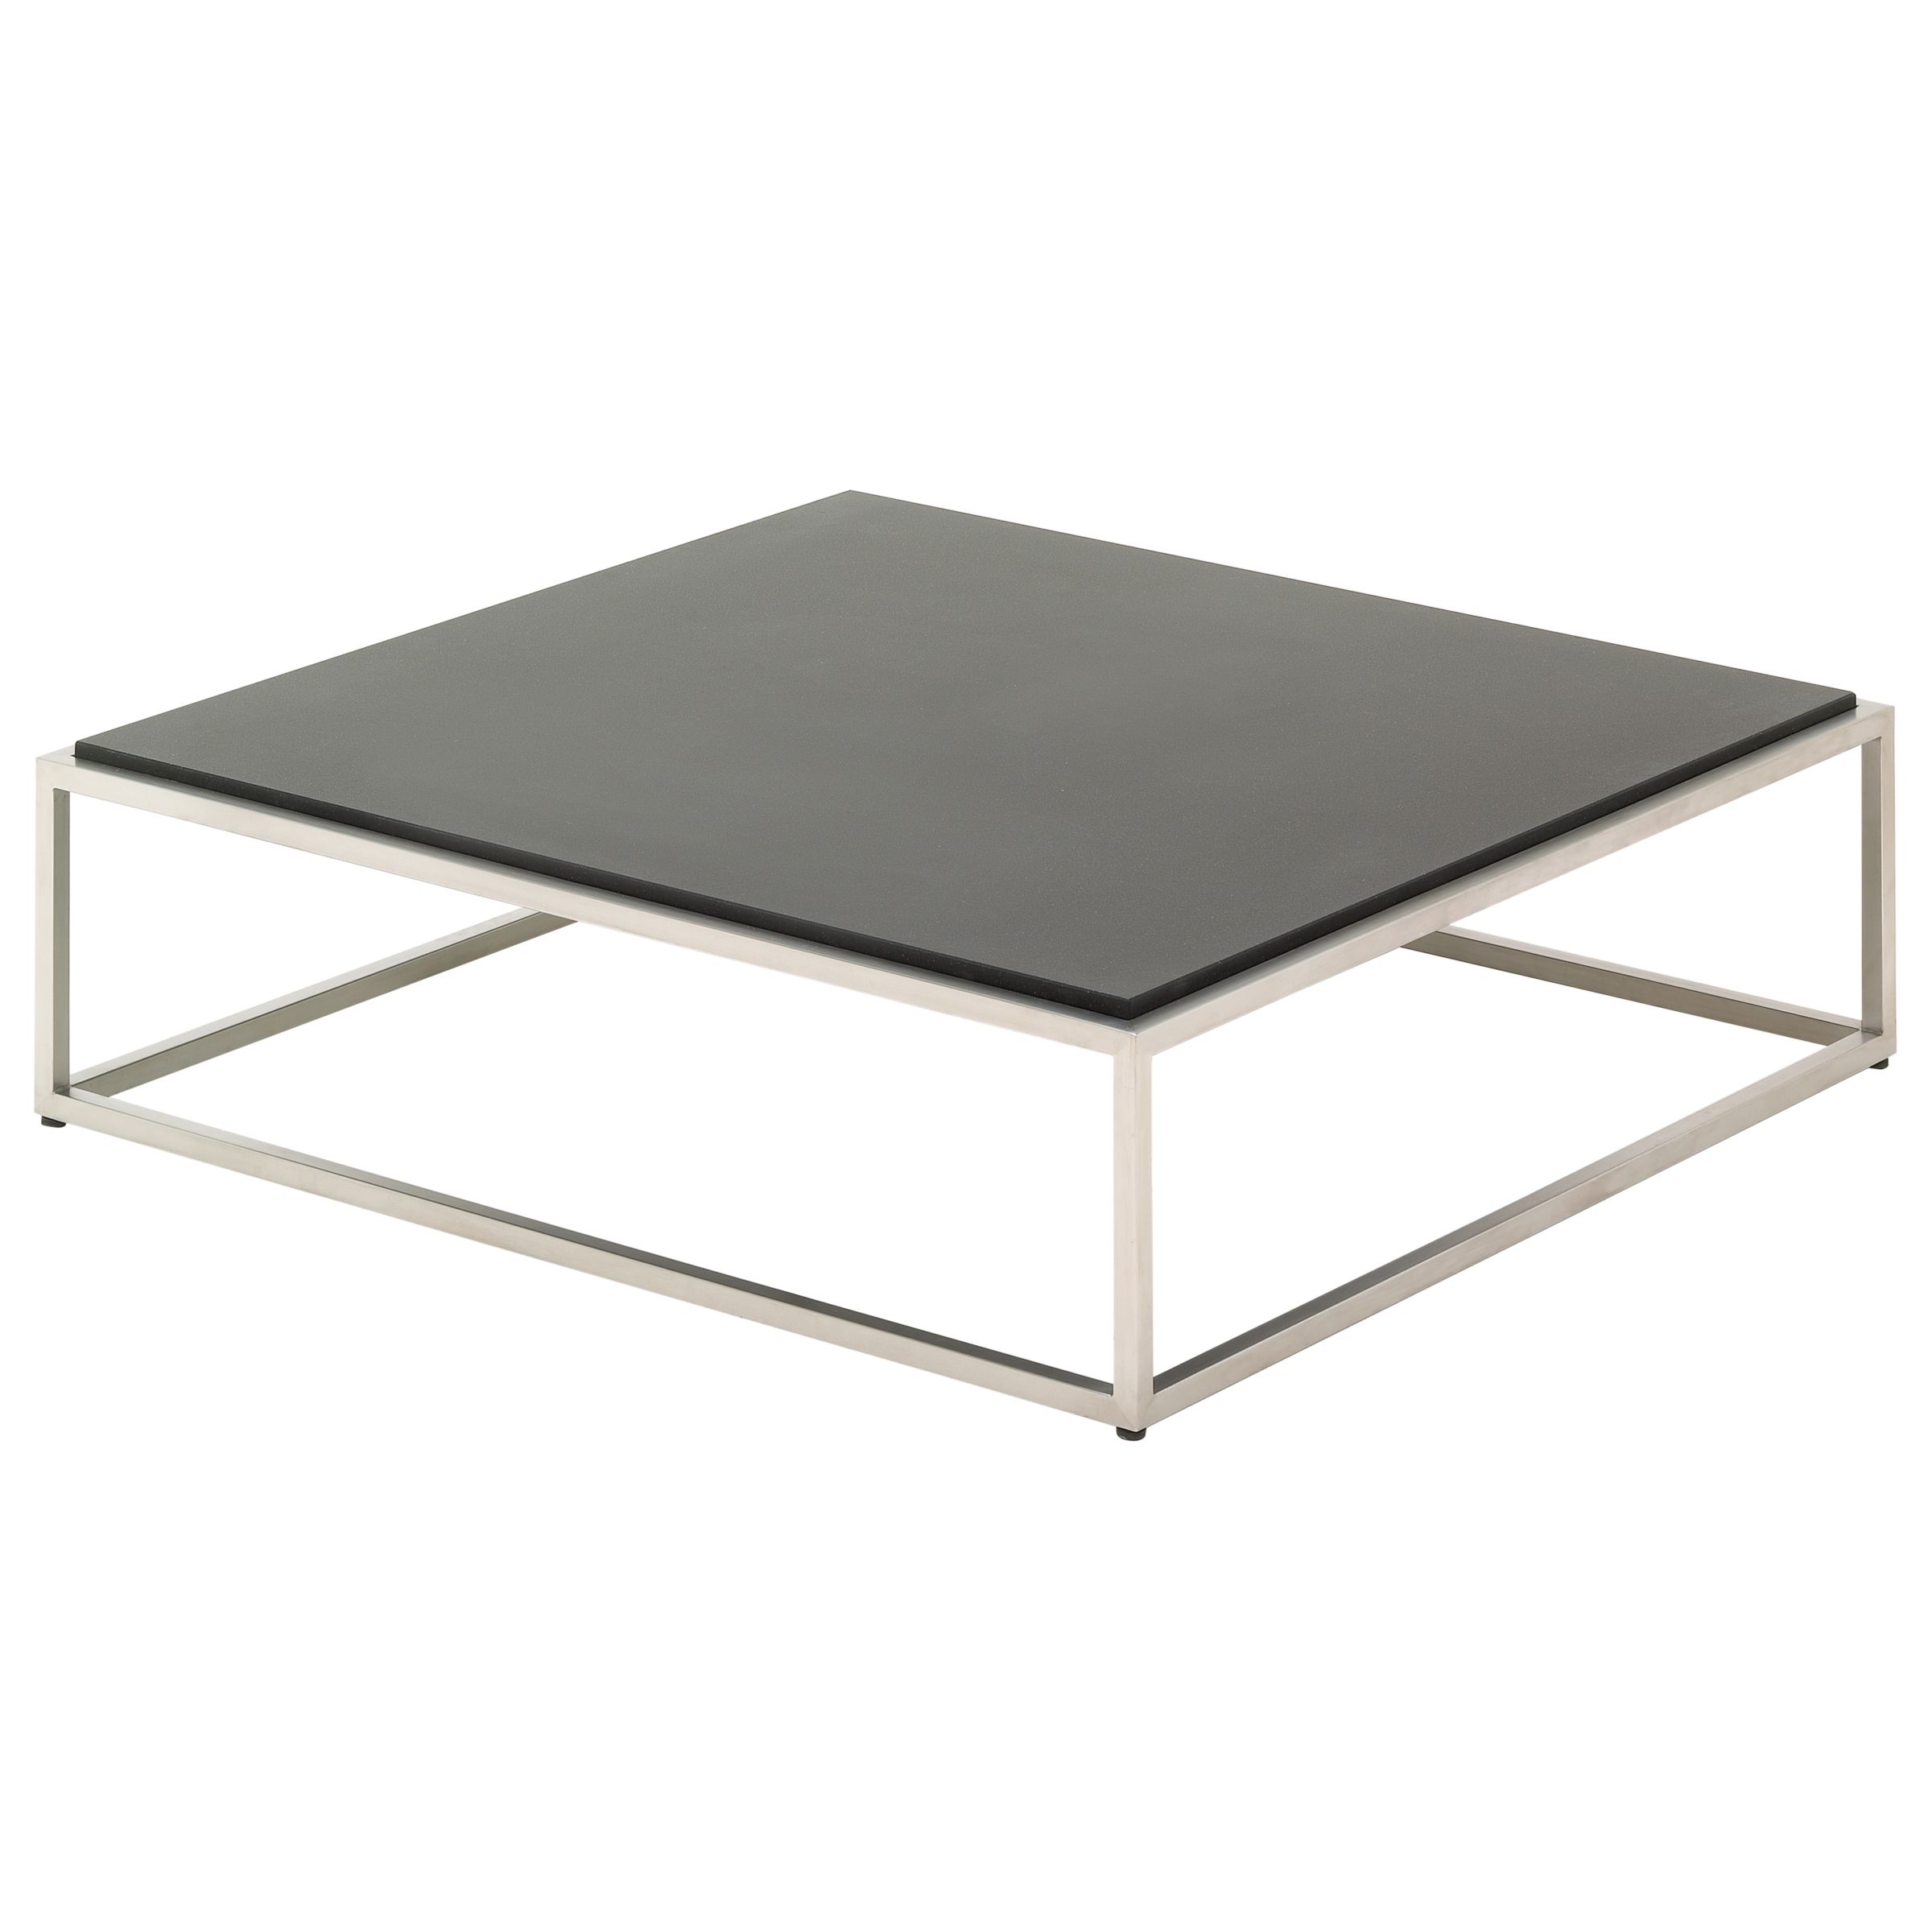 Gloster Cloud Square Outdoor Coffee Table, Quartz Top, Onyx, 100 x 100cm, width 100cm